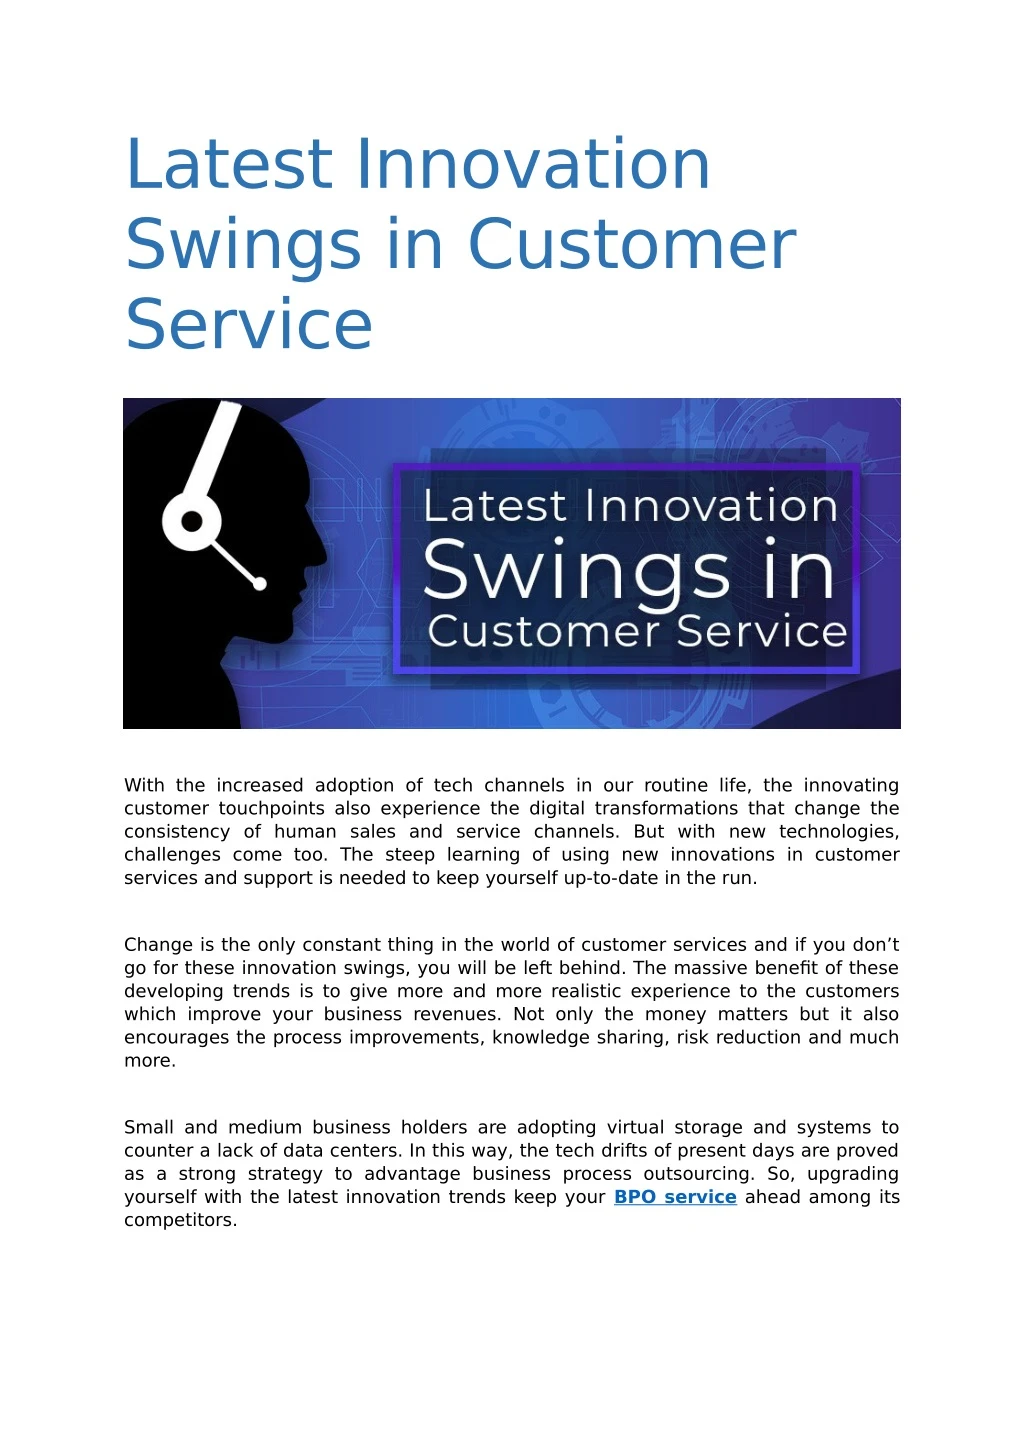 latest innovation swings in customer service